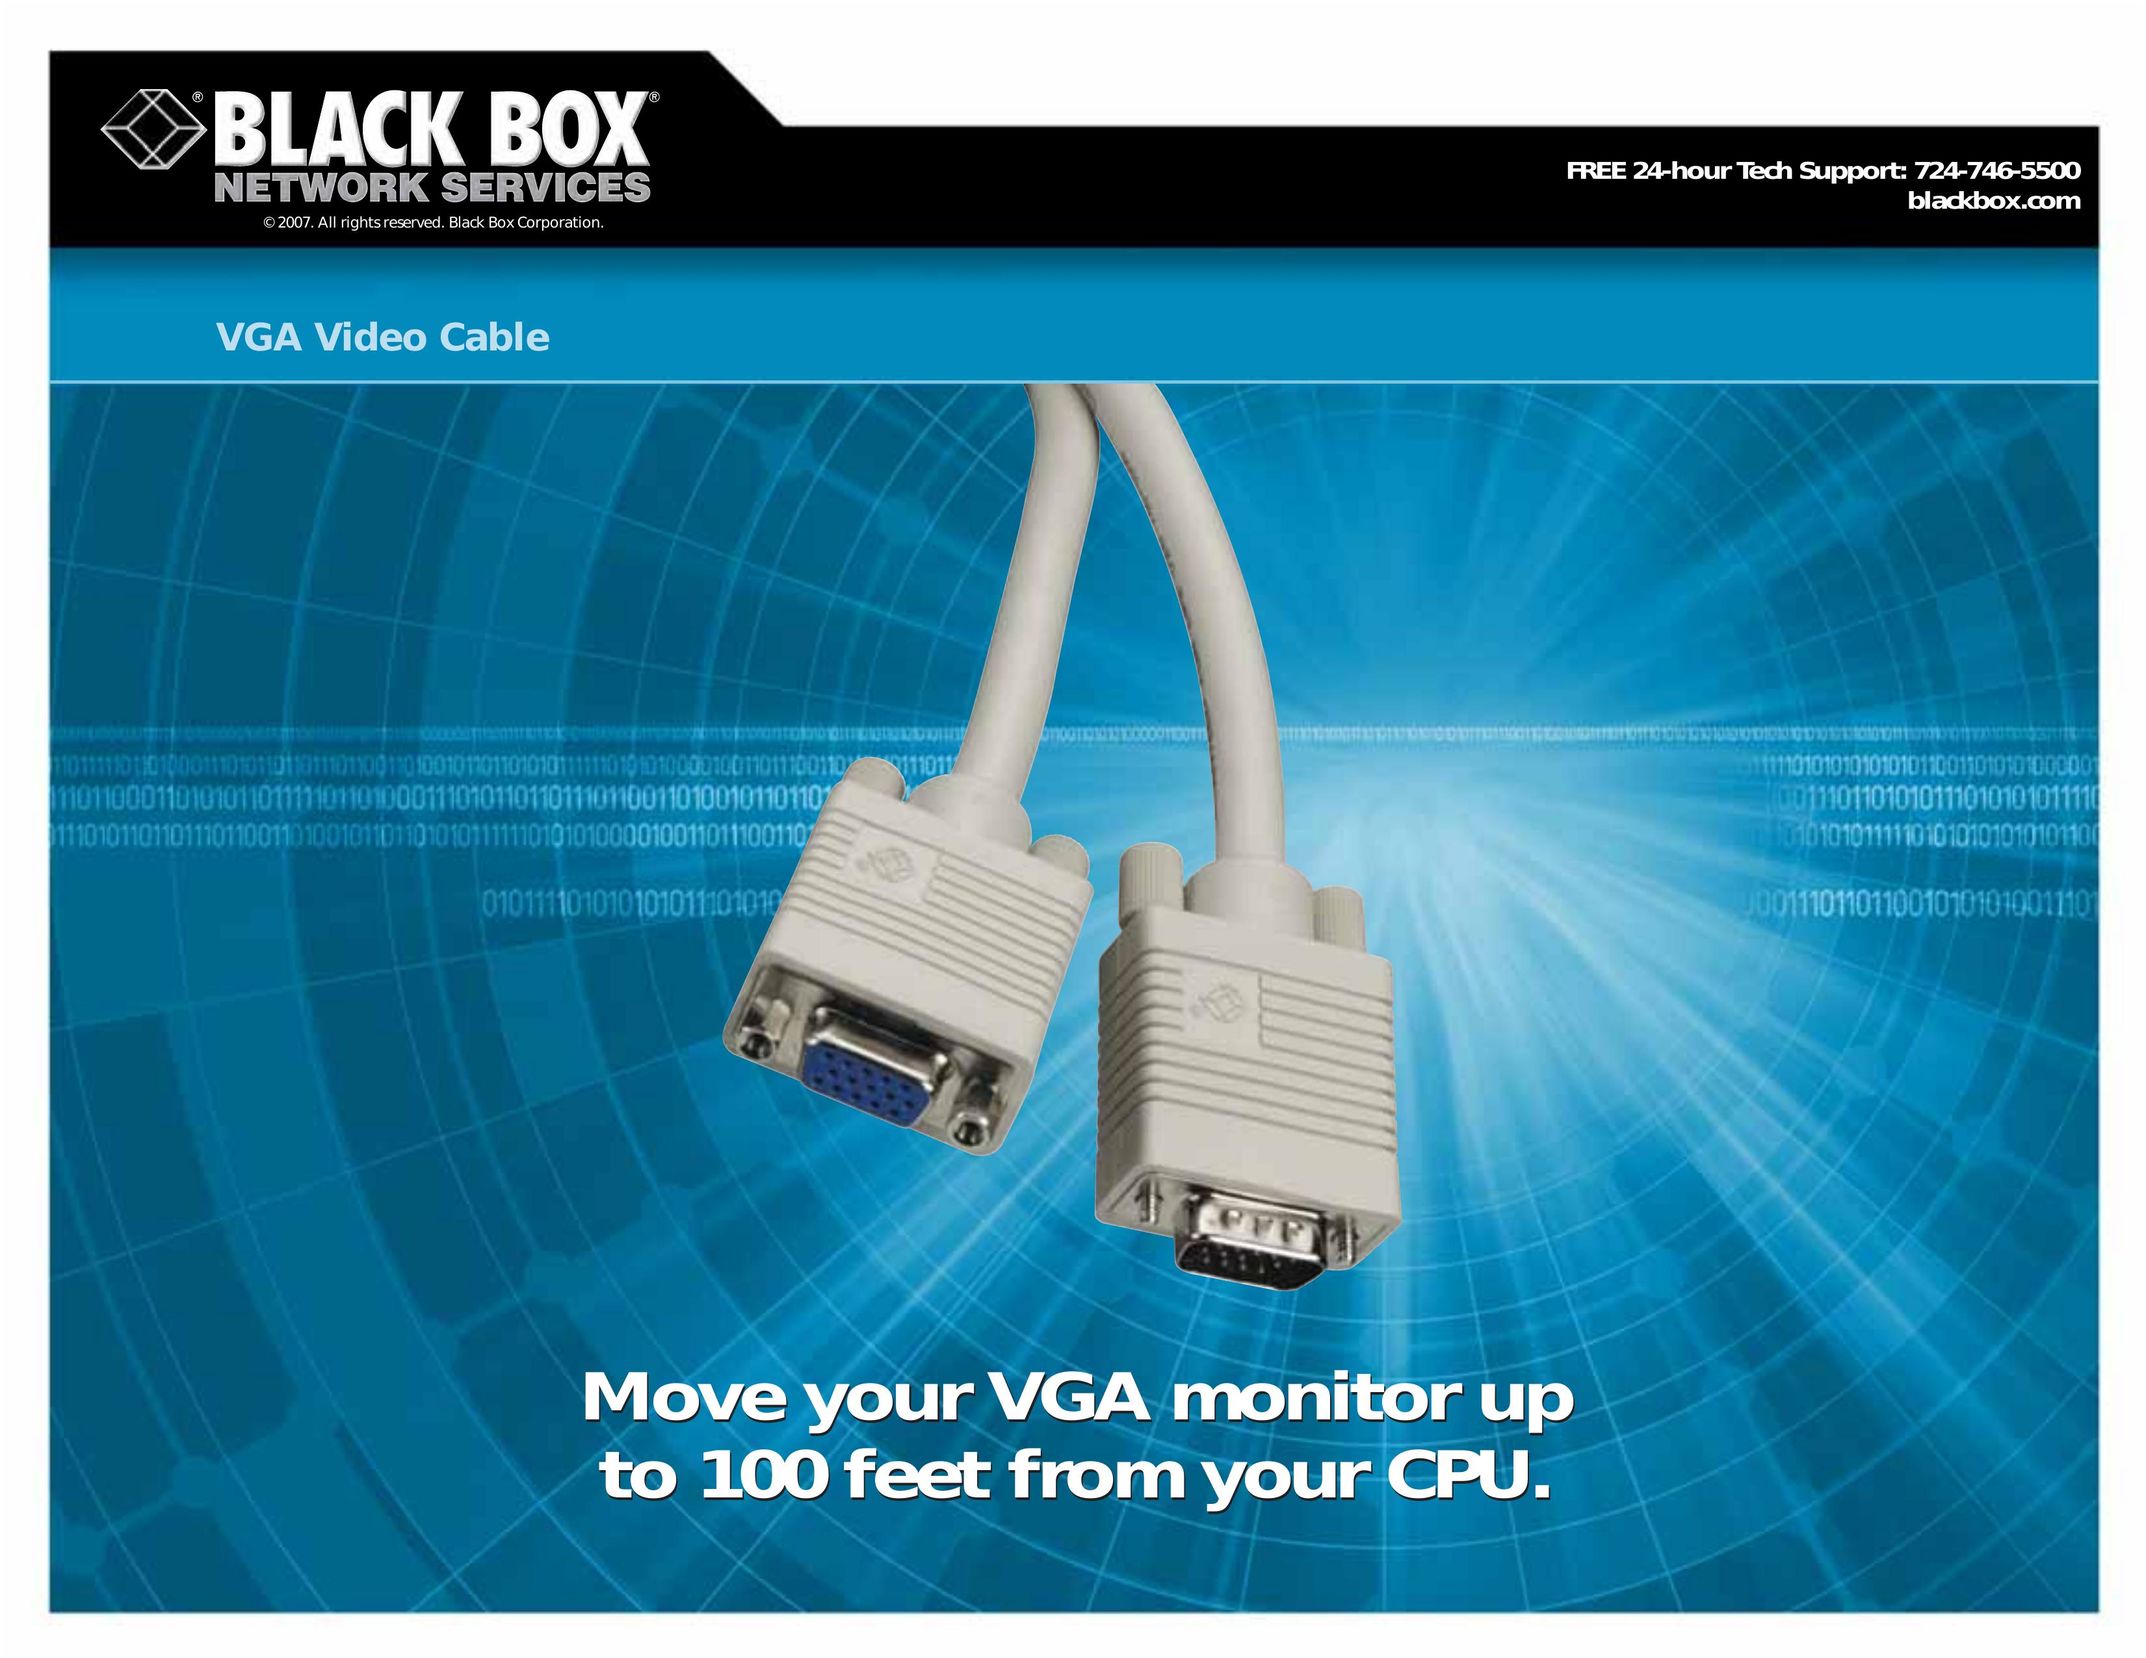 Black Box VGA Video Cable TV Cables User Manual